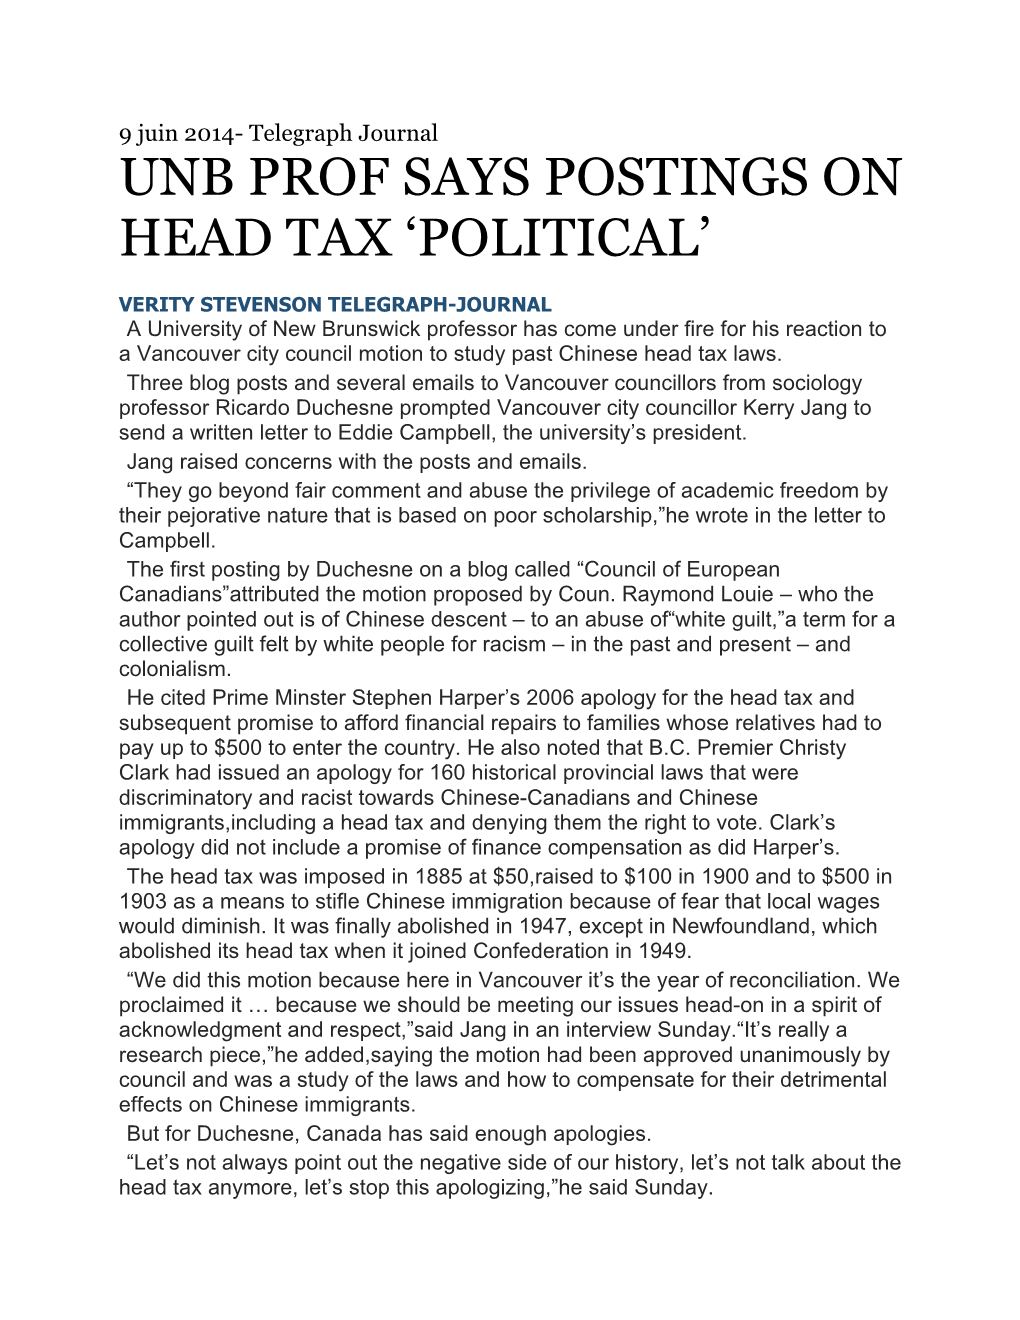 Unb Prof Says Postings on Head Tax 'Political'